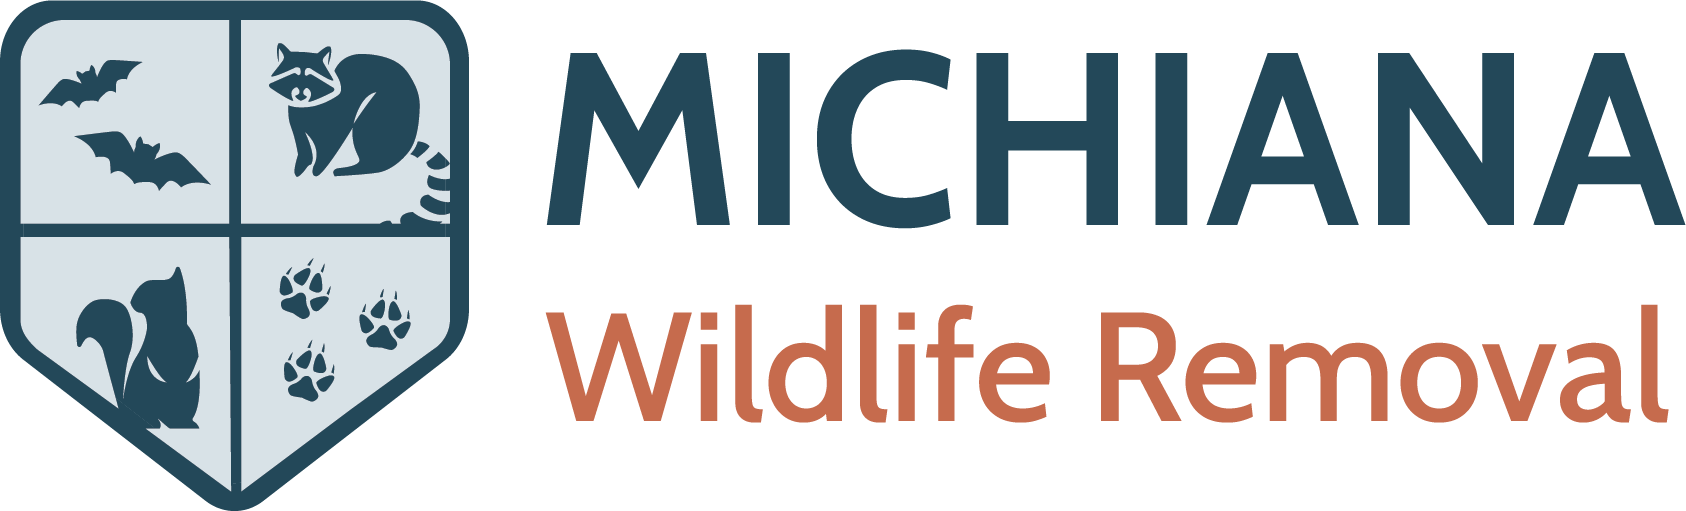 Michiana Wildlife Removal